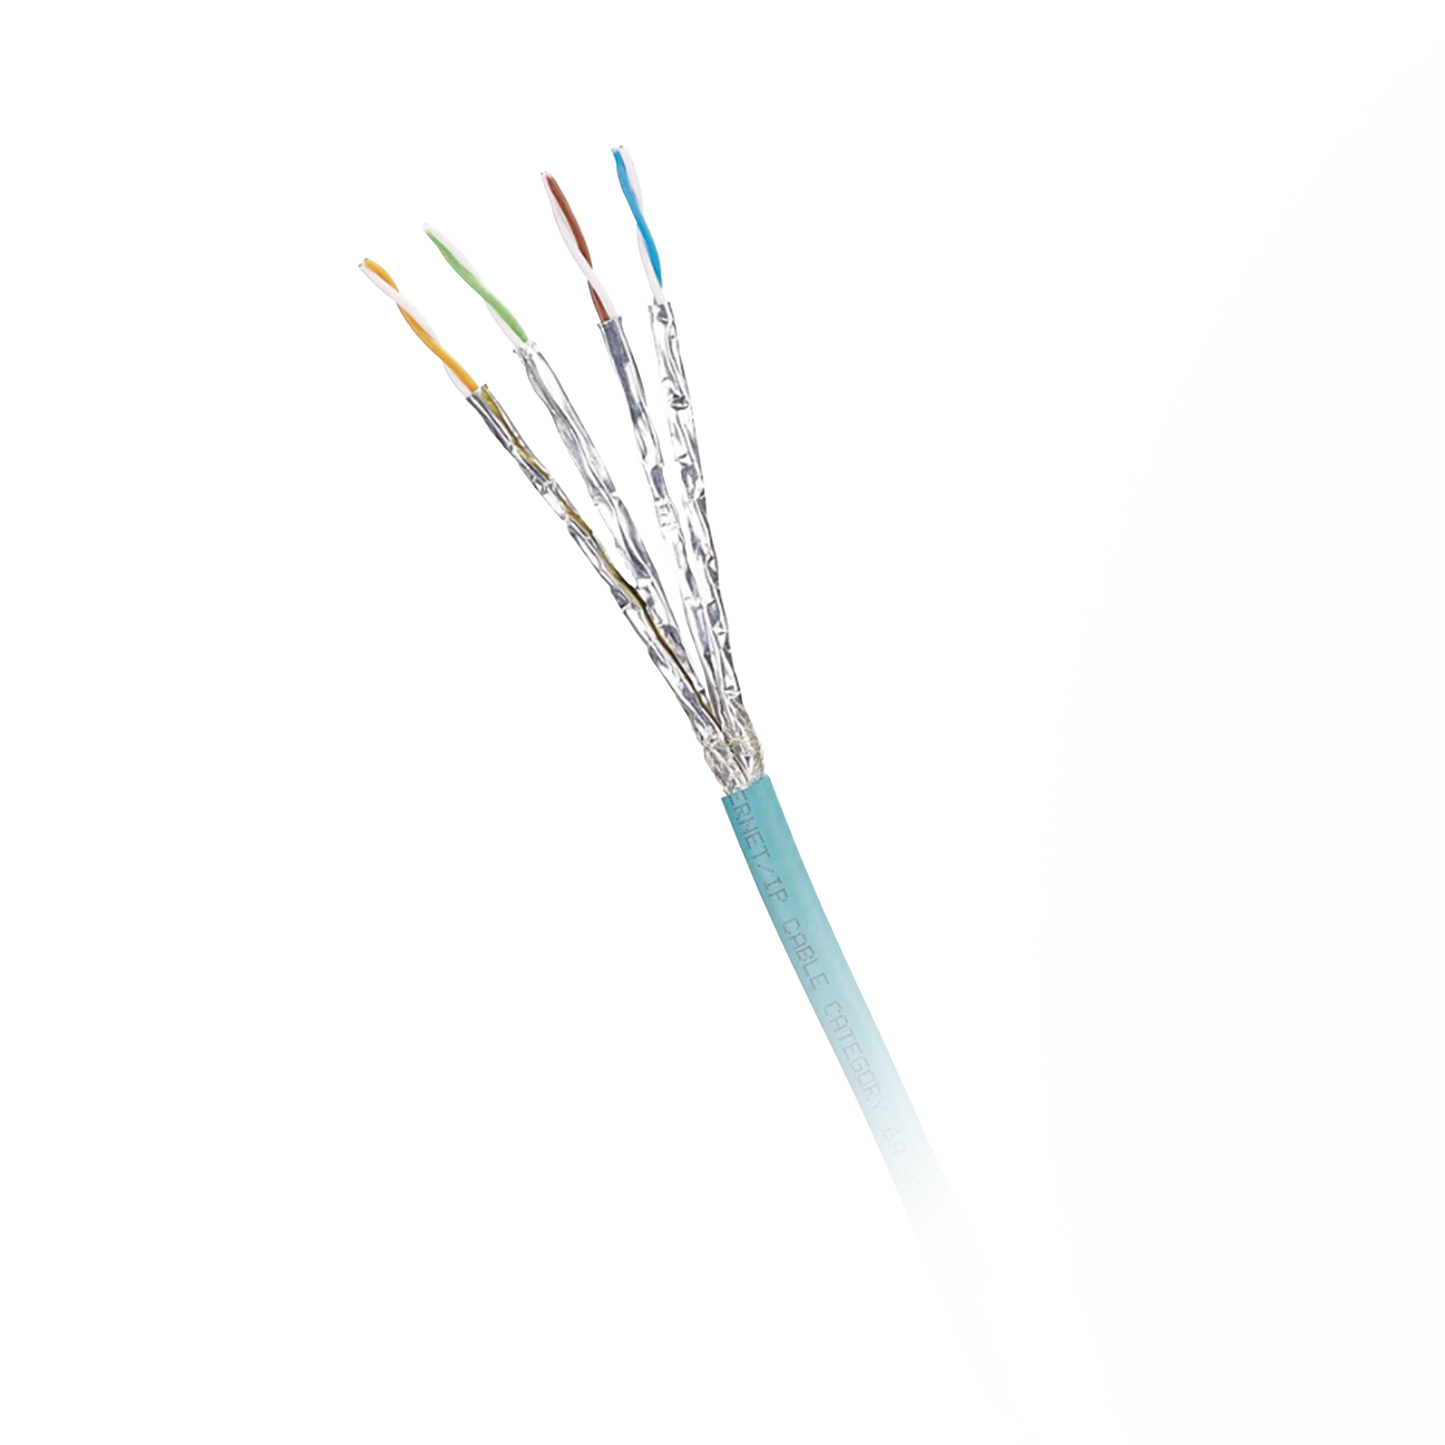 Bobina De Cable Blindado S/Ftp Categoría 6A, Uso Industrial Con Resistencia Al Aceite, Rayos Uv Y Abrasión, Multifilar (Flexible), Color Azul Cerceta, Bobina De 500M